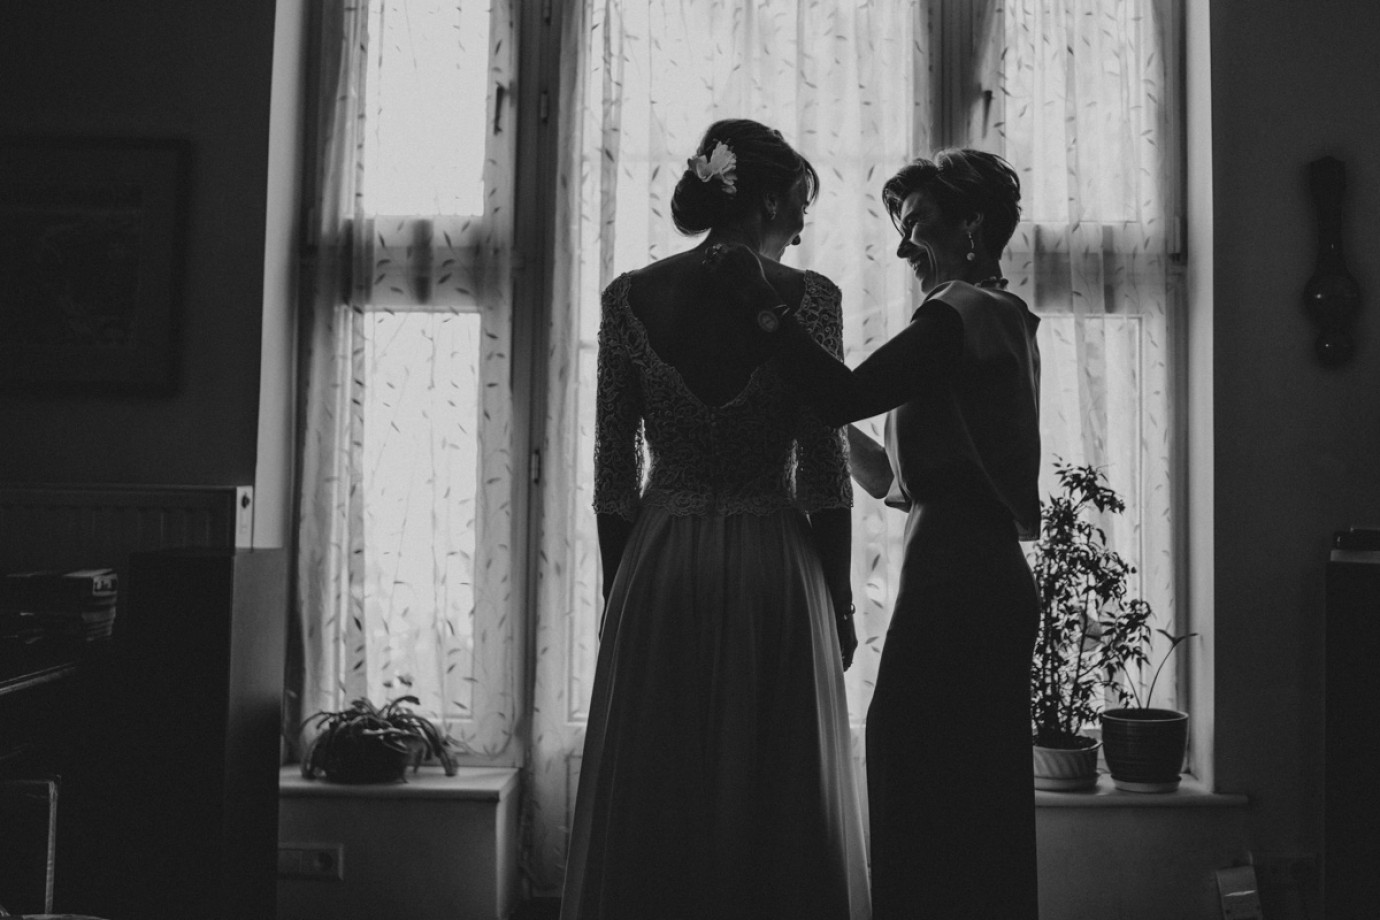 zdjęcia gdansk fotograf kwiecien-plecien-studio portfolio zdjecia slubne inspiracje wesele plener slubny sesja slubna